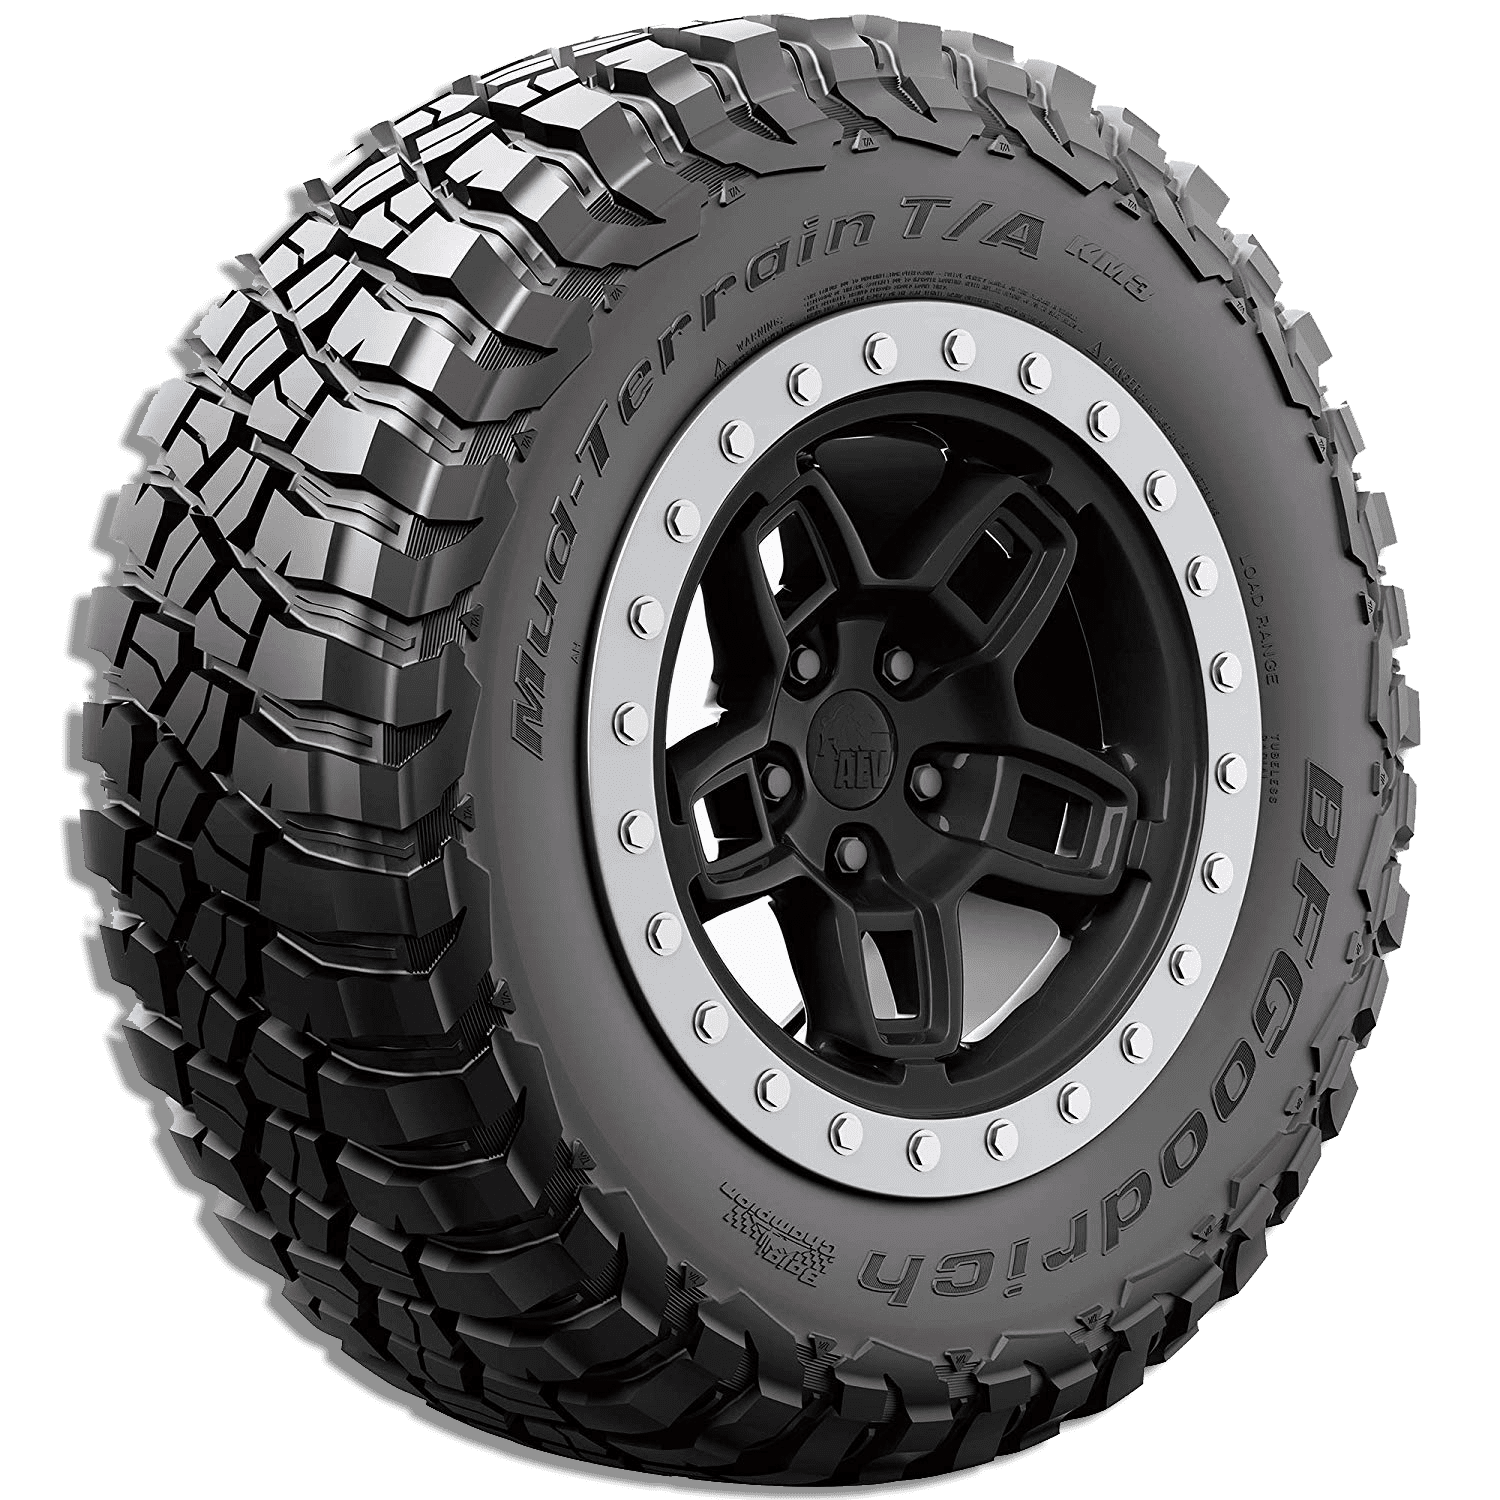 Goodrich Mud Terrain T A Km3 Tire, Memory Foam Rug Pad 5 215 75 R15